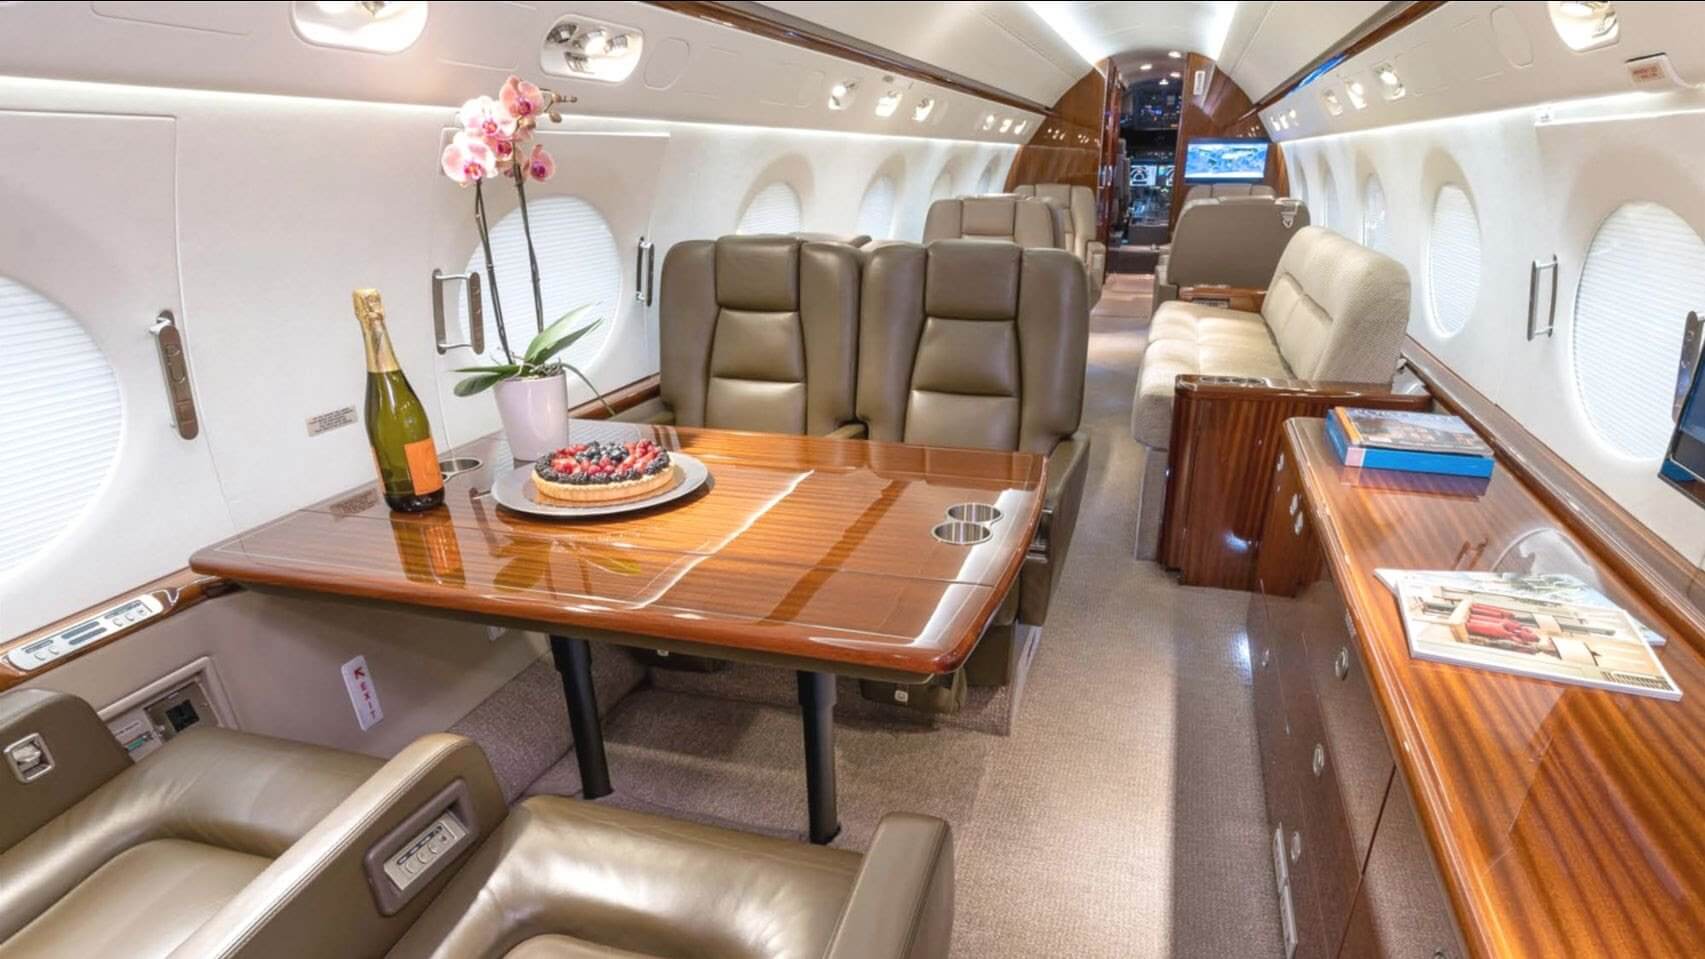 2015 GULFSTREAM G550 - Heavy Jet - Wonders of Luxury